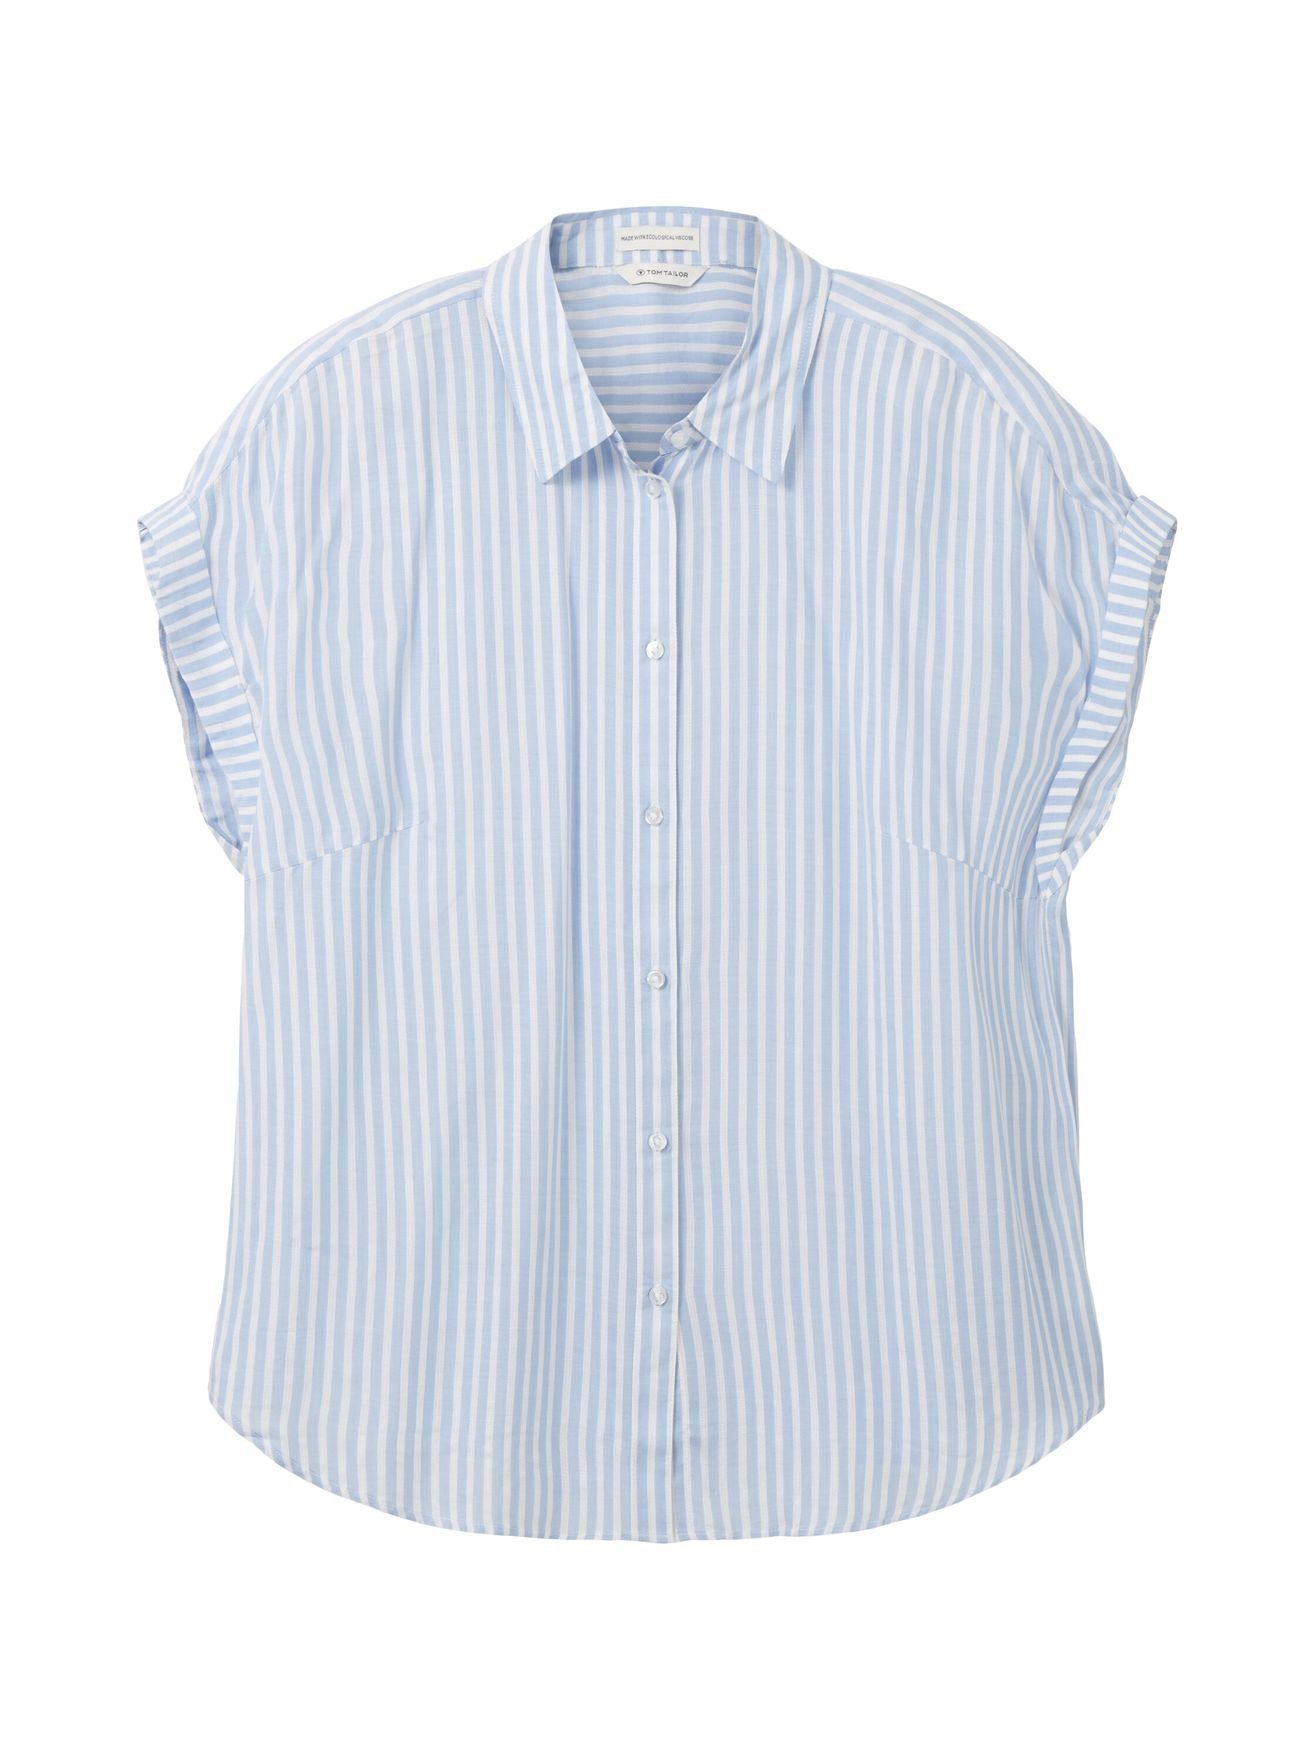 TOM TAILOR Blusenshirt Kurzarm Shirt Bluse 5364 Übergröße Gestreifte in Blau